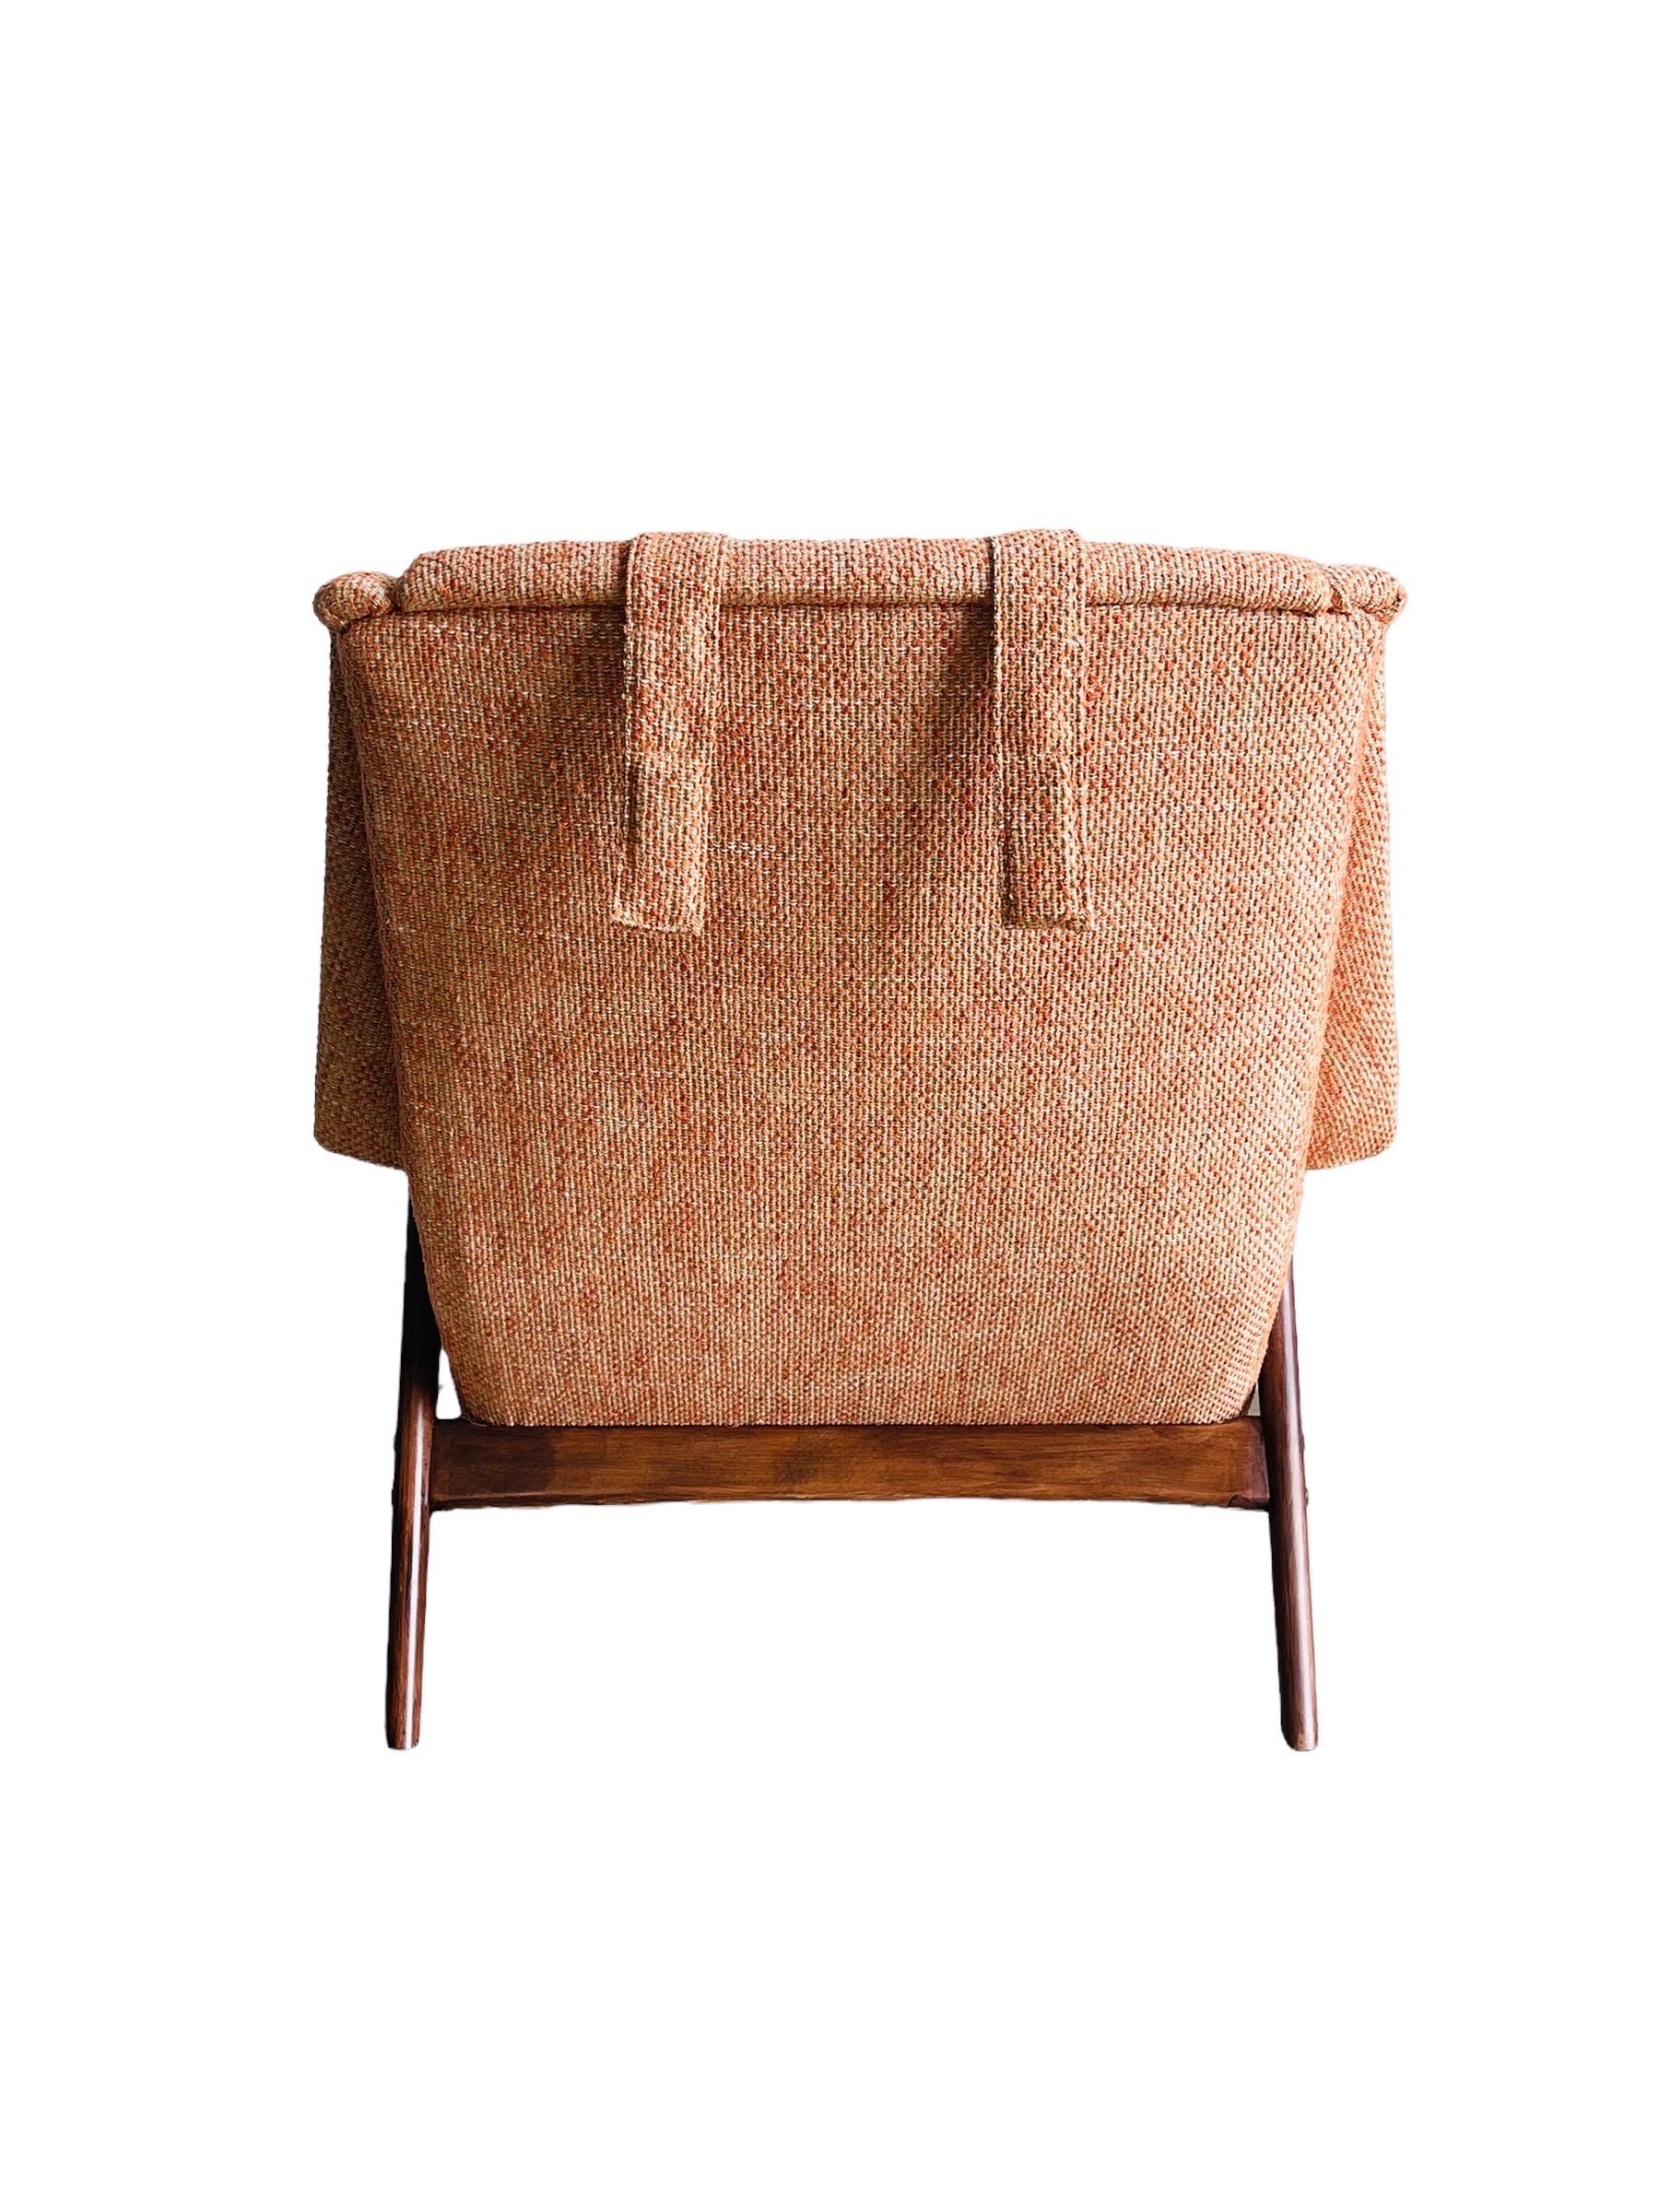 Folke Ohlsson Walnut Lounge Chair & Ottoman for DUX 4